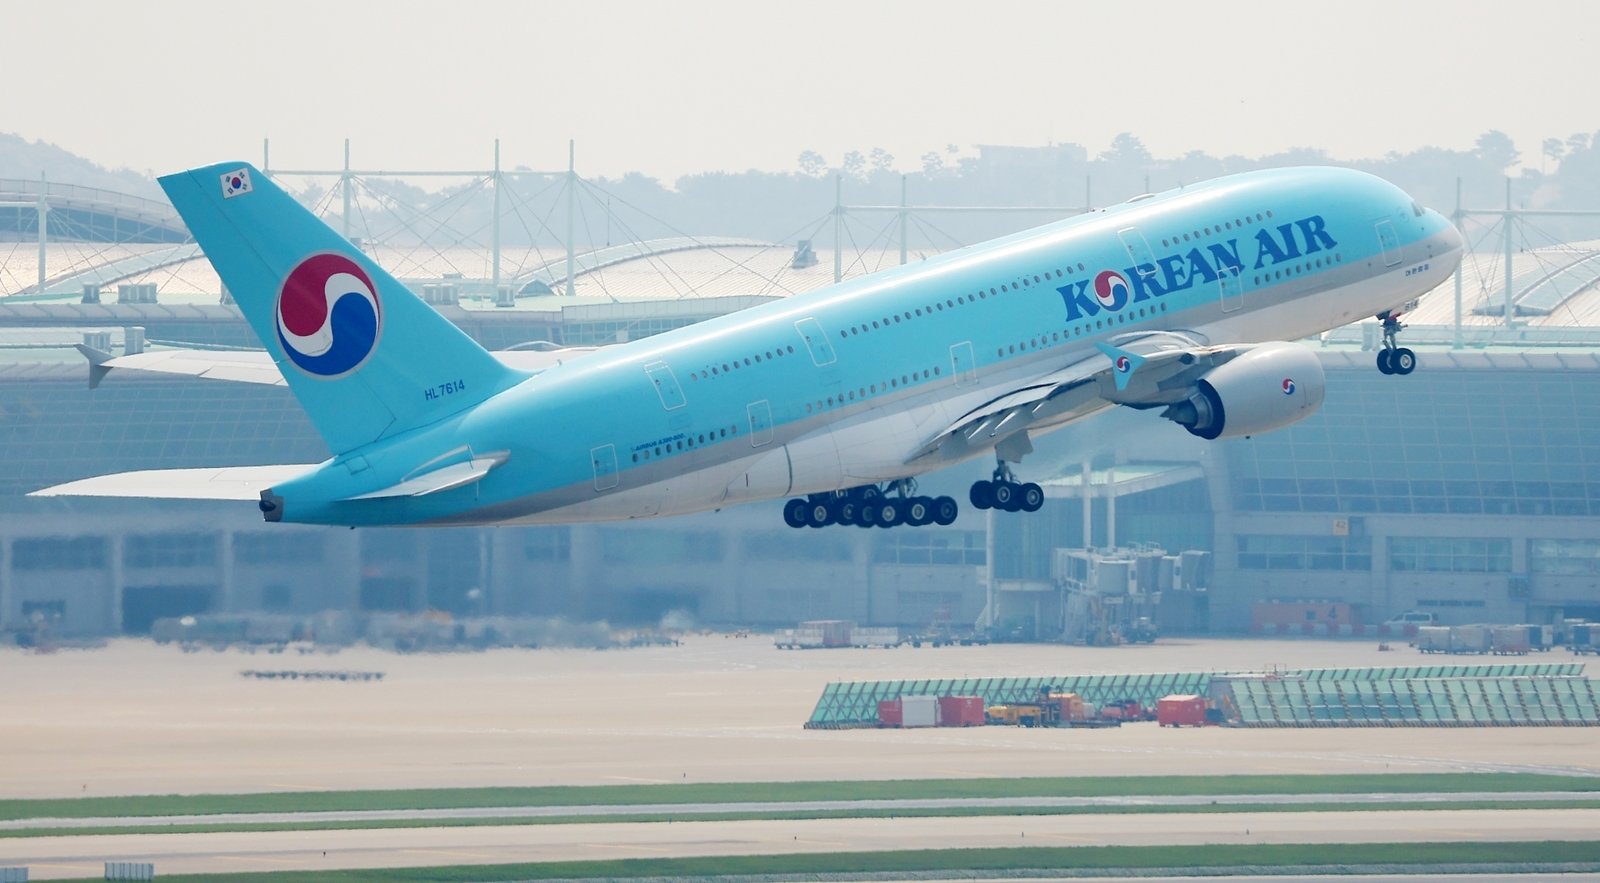 A Korean Air A380 superjumbo jet